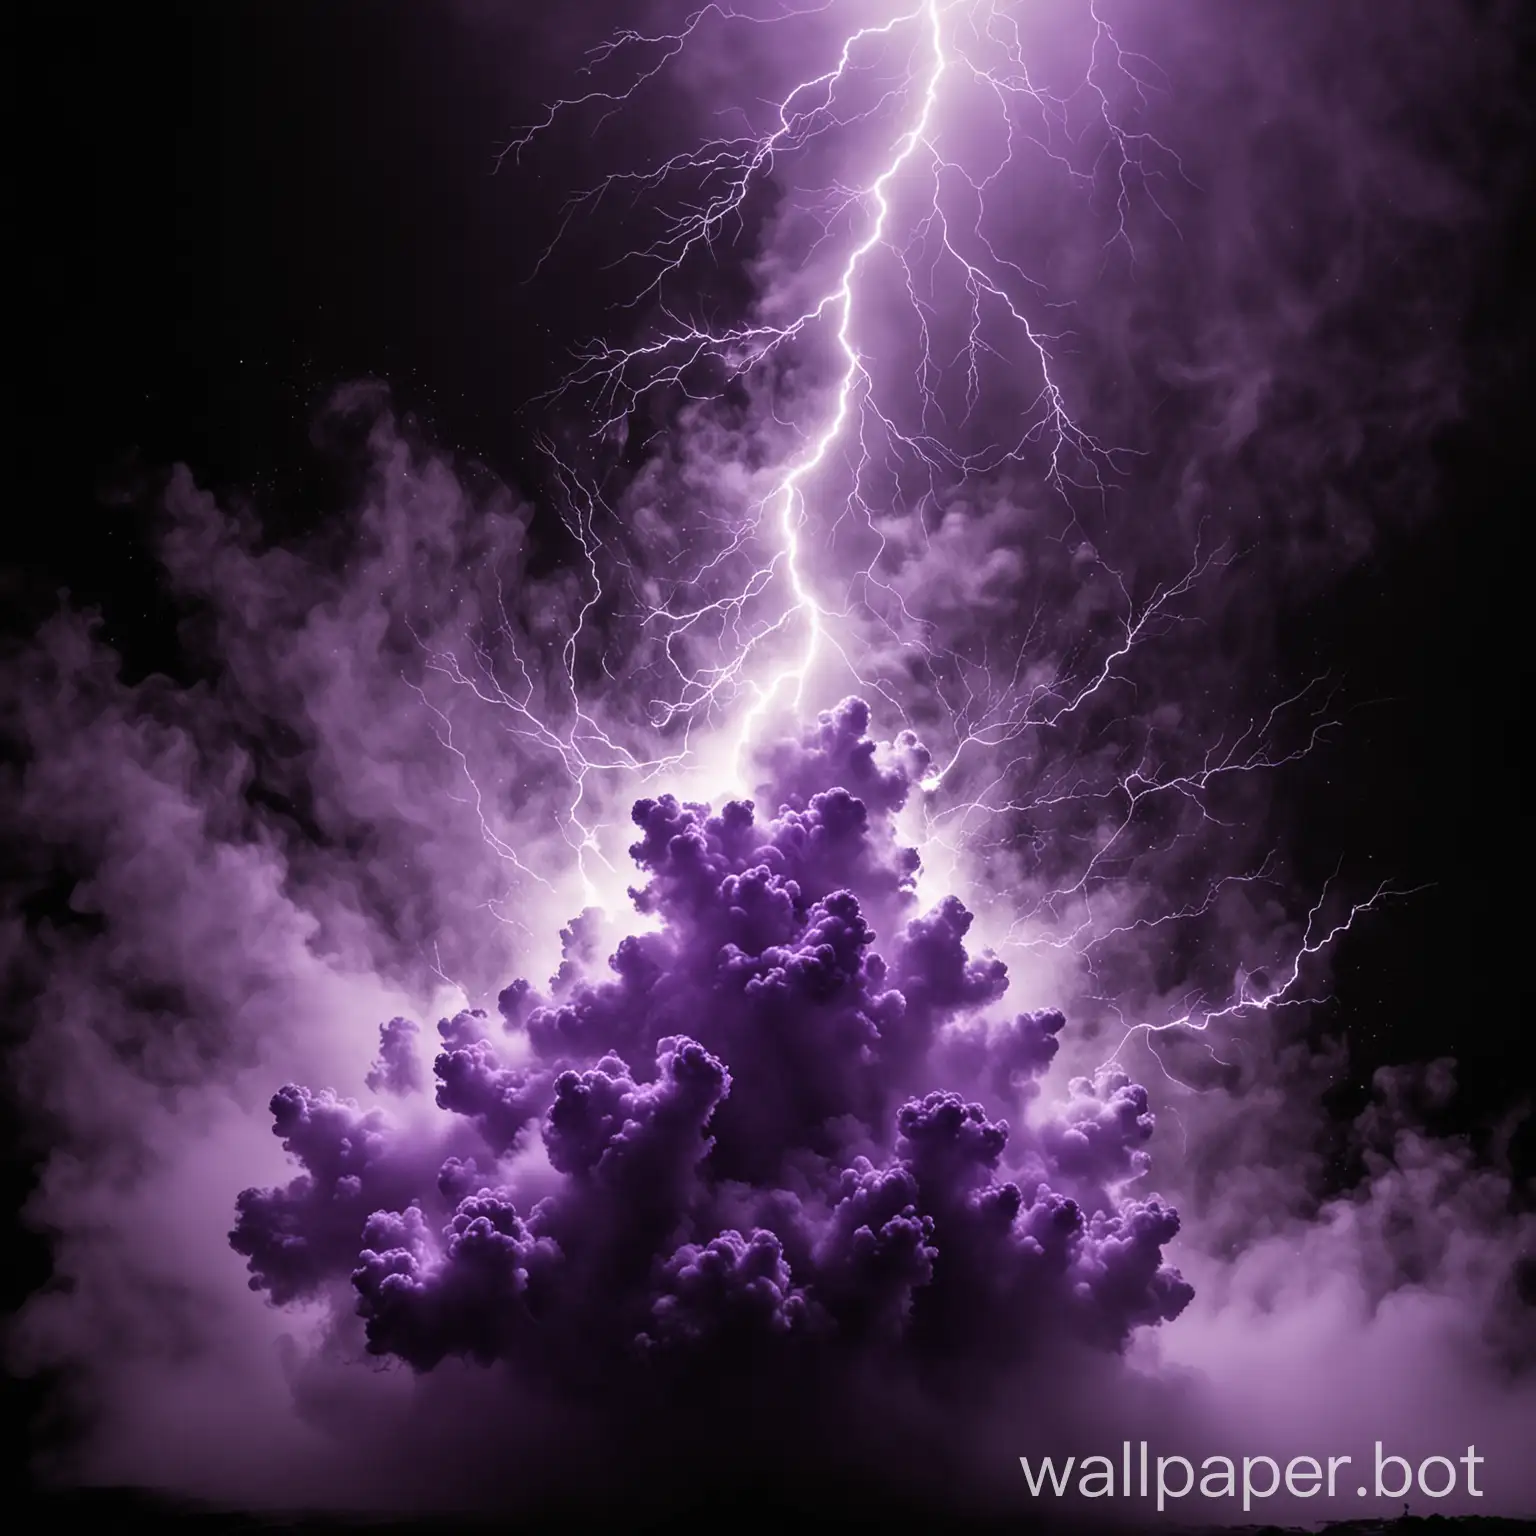 Ethereal-Violet-Mist-with-Lightning-Flashes-on-Black-Background